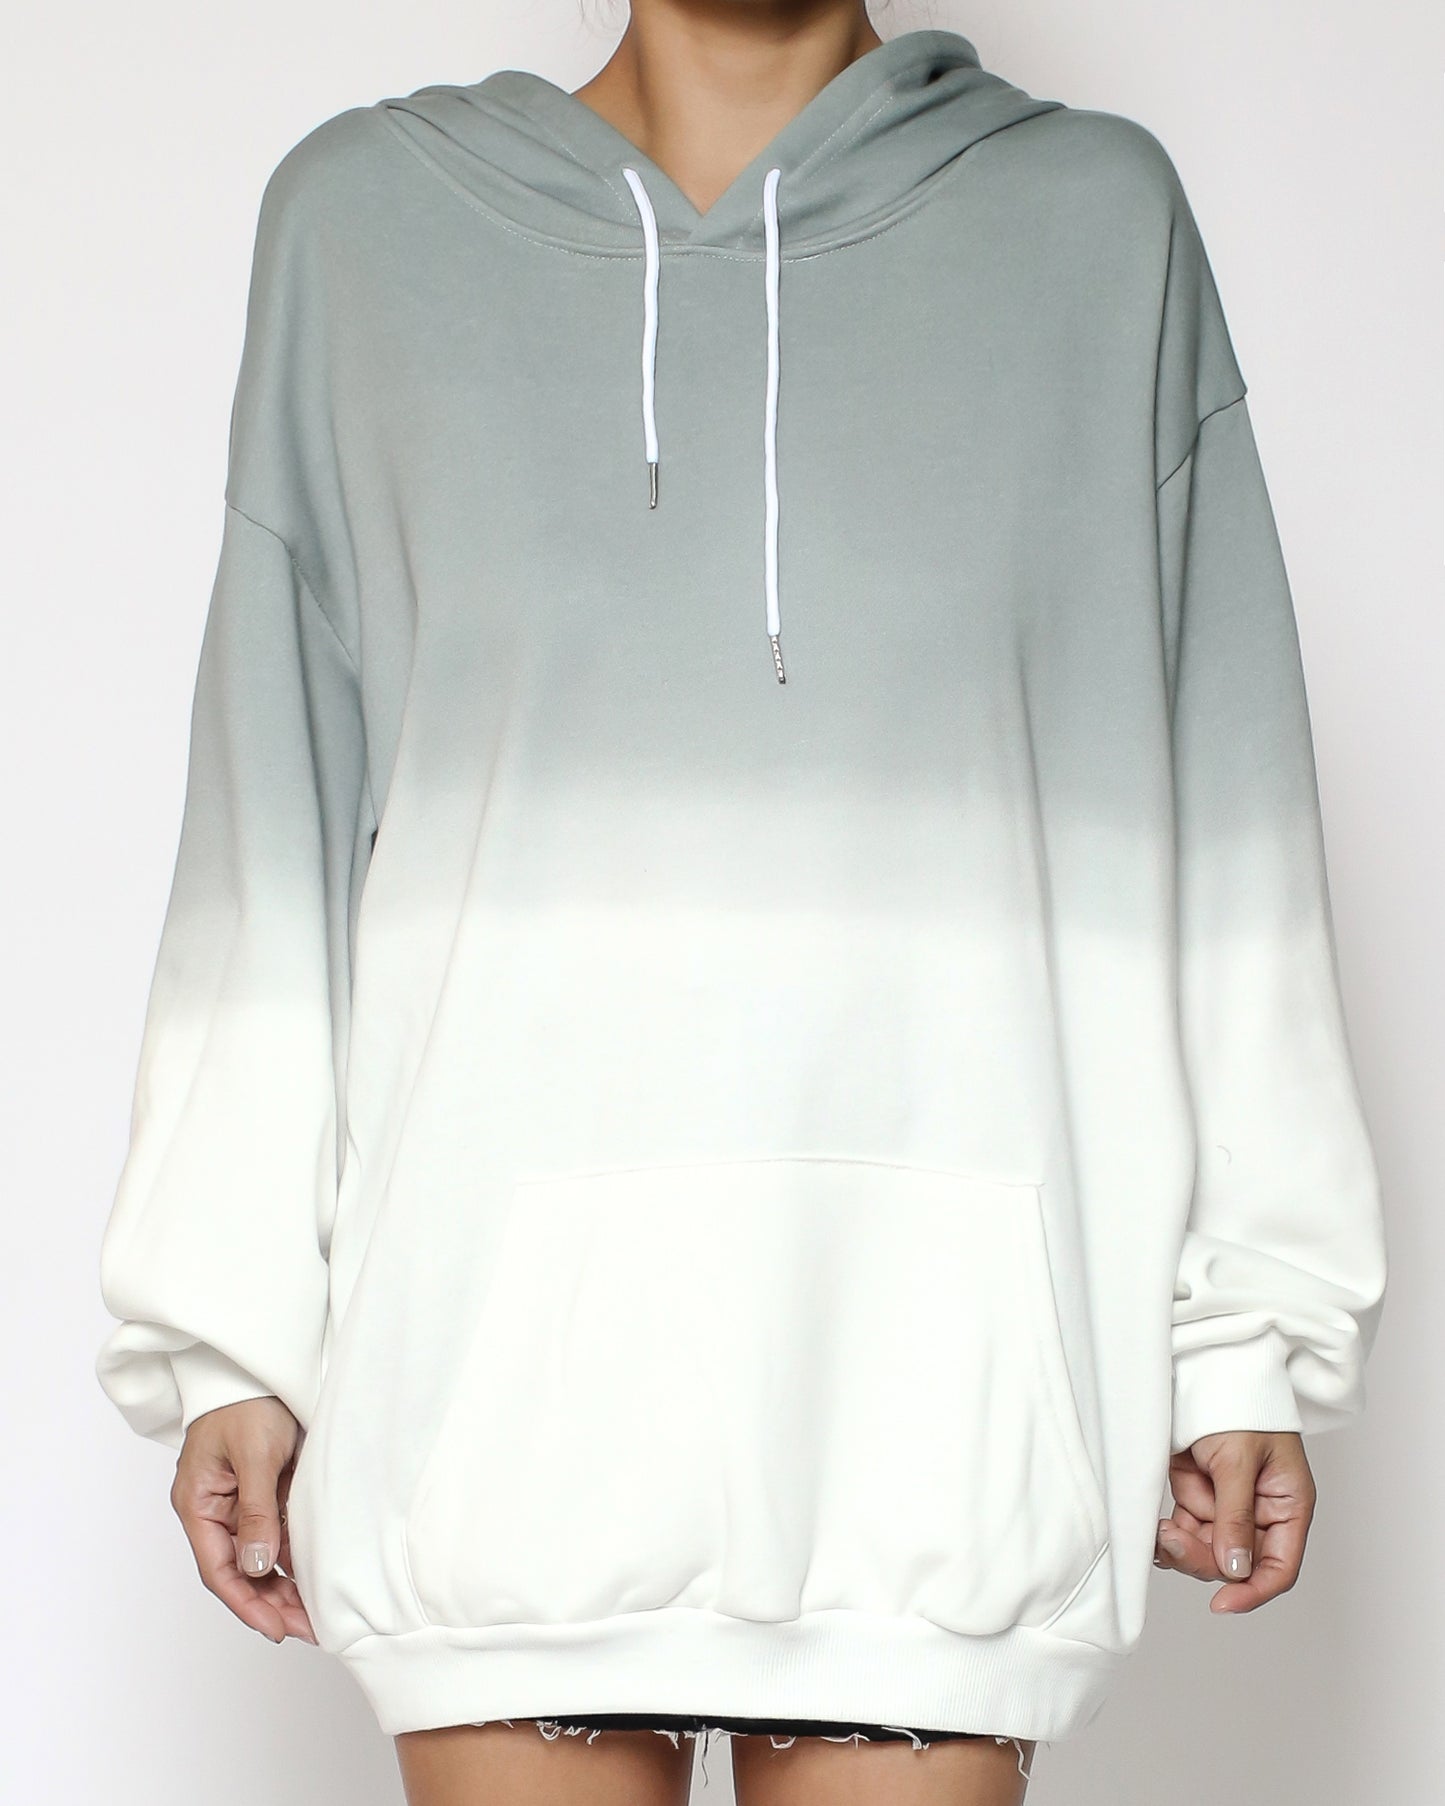 grey ombre hoodie sweatshirt *pre-order*